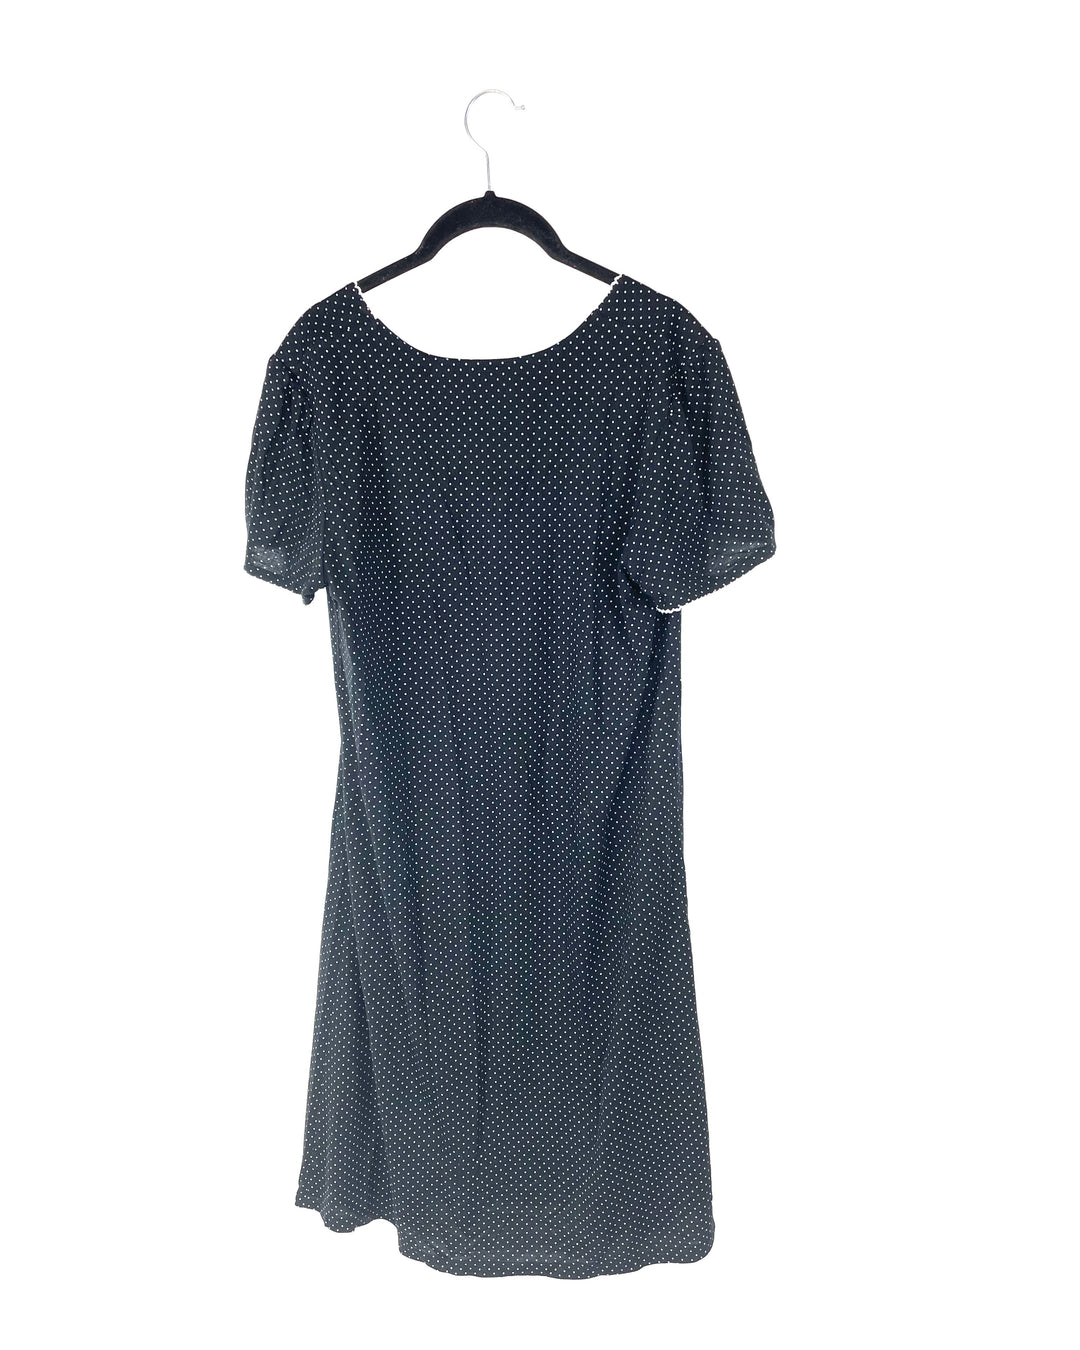 Short Sleeve Black Polka Dot Nightgown - Medium